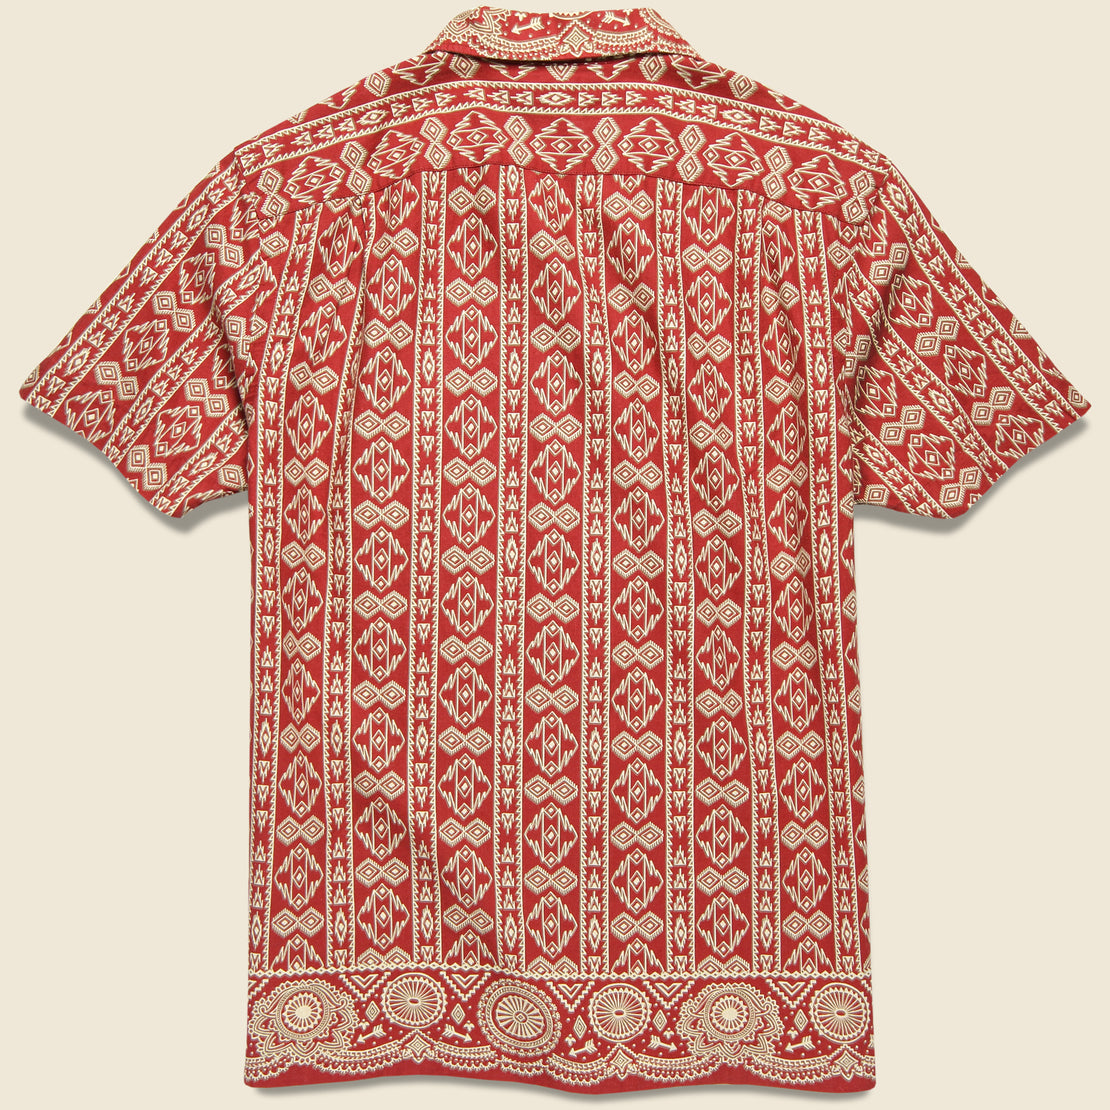 2 Pocket Camp Shirt - Red/Tan